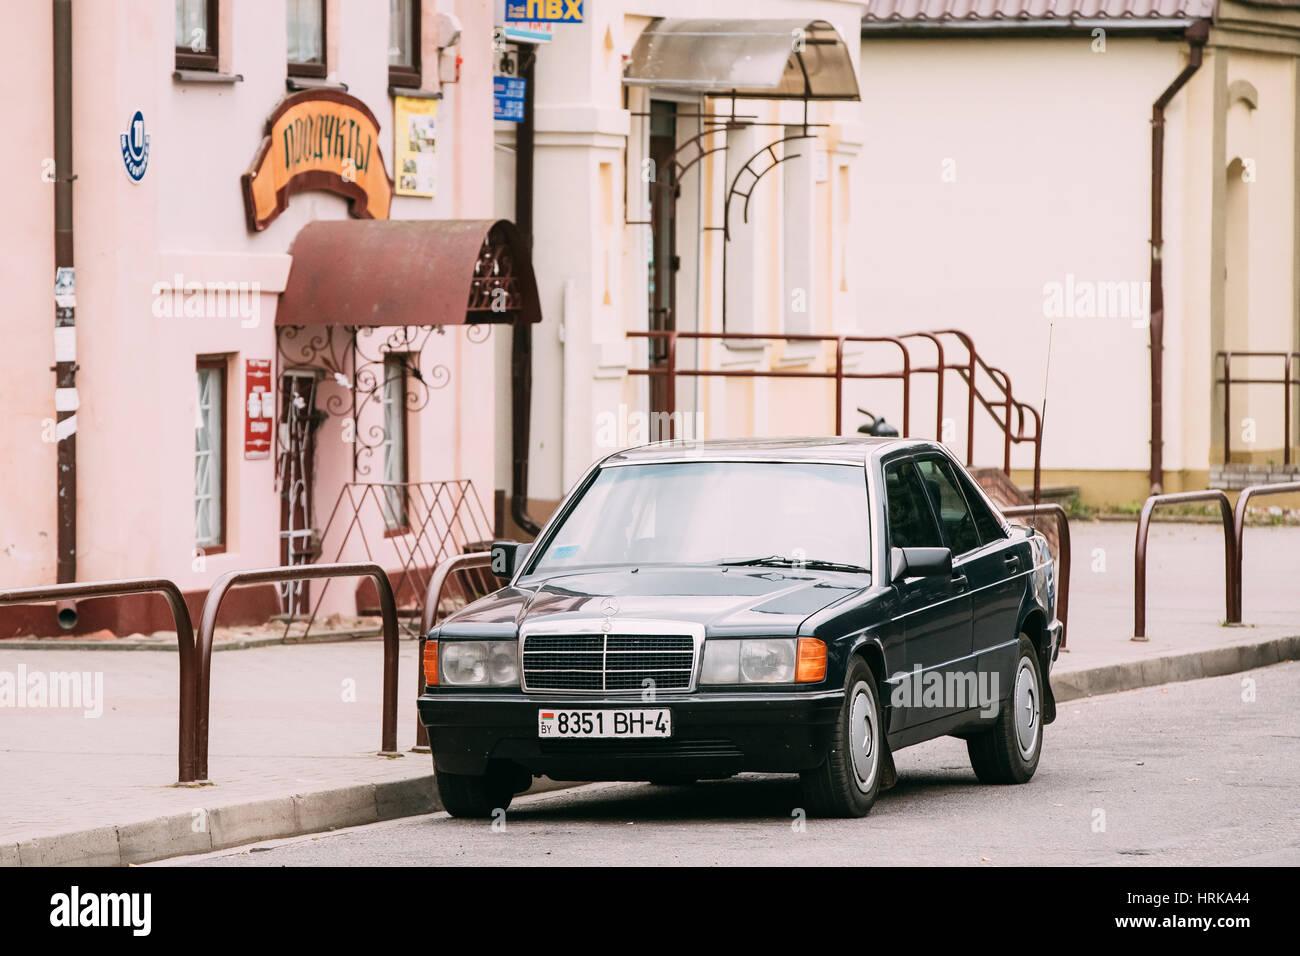 Mir, Belarus - September 1, 2016: Old car 1996 Mercedes-Benz 190 E (W201) sedan parking on street. First compact executive car from Mercedes-Benz intr Stock Photo